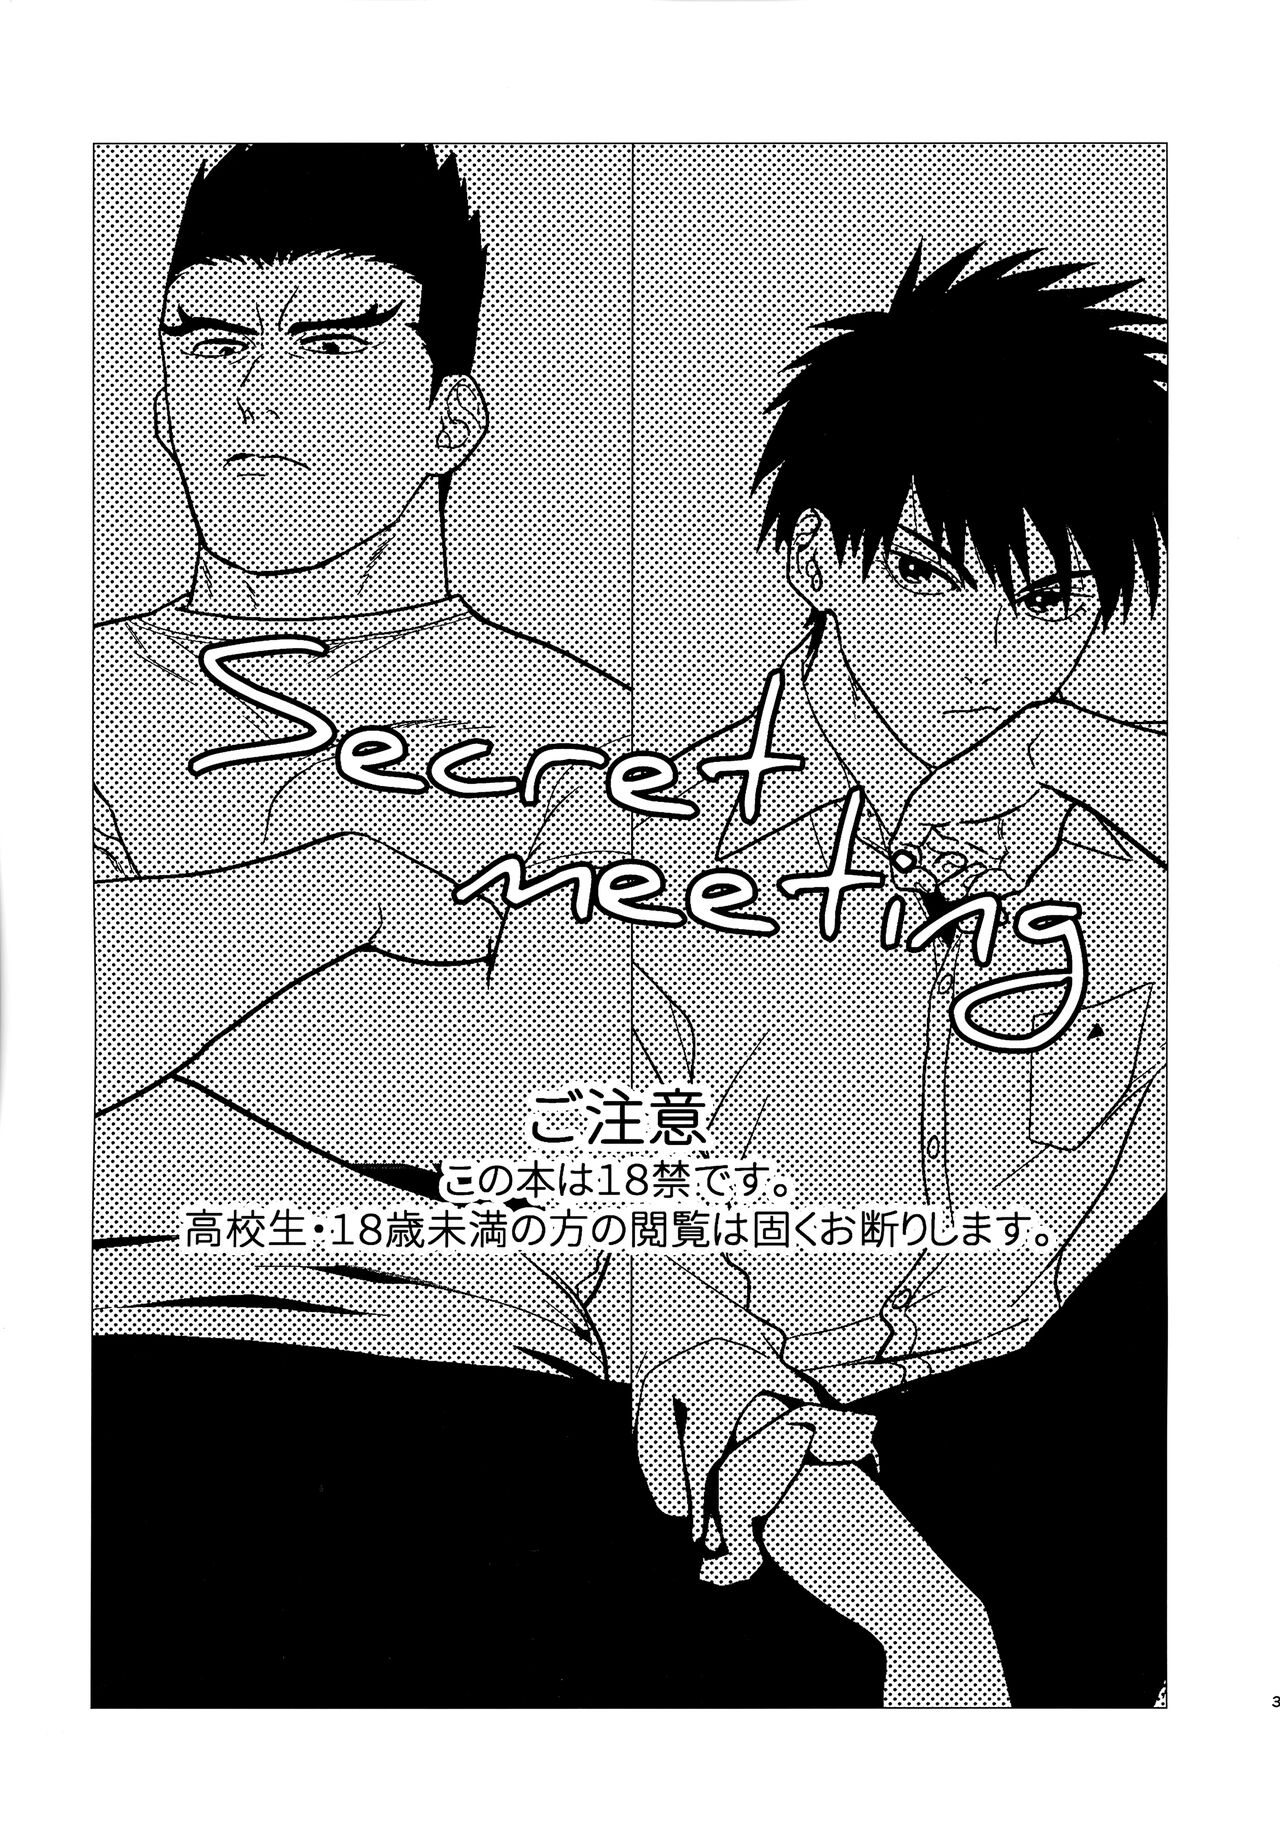 Secret meeting